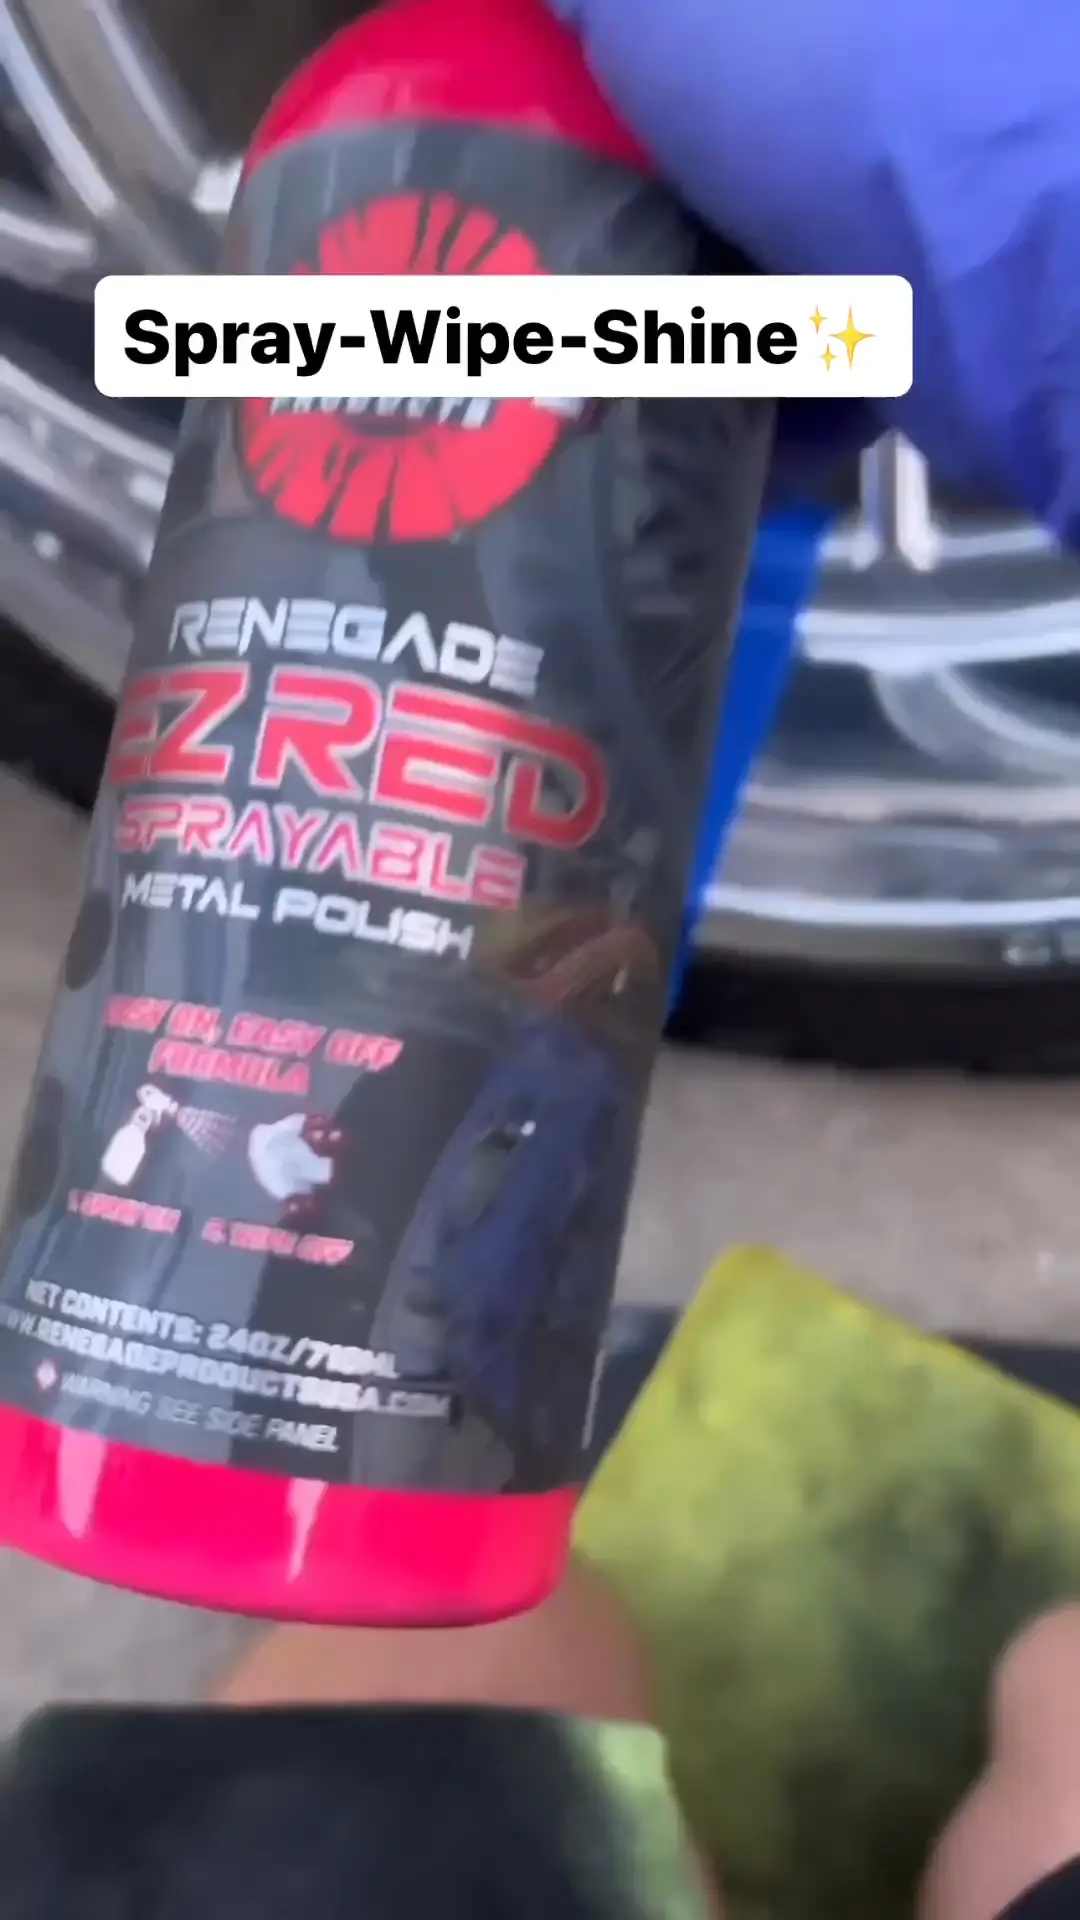 How do you polish aluminum? Renegade's EZ Red Sprayable Metal